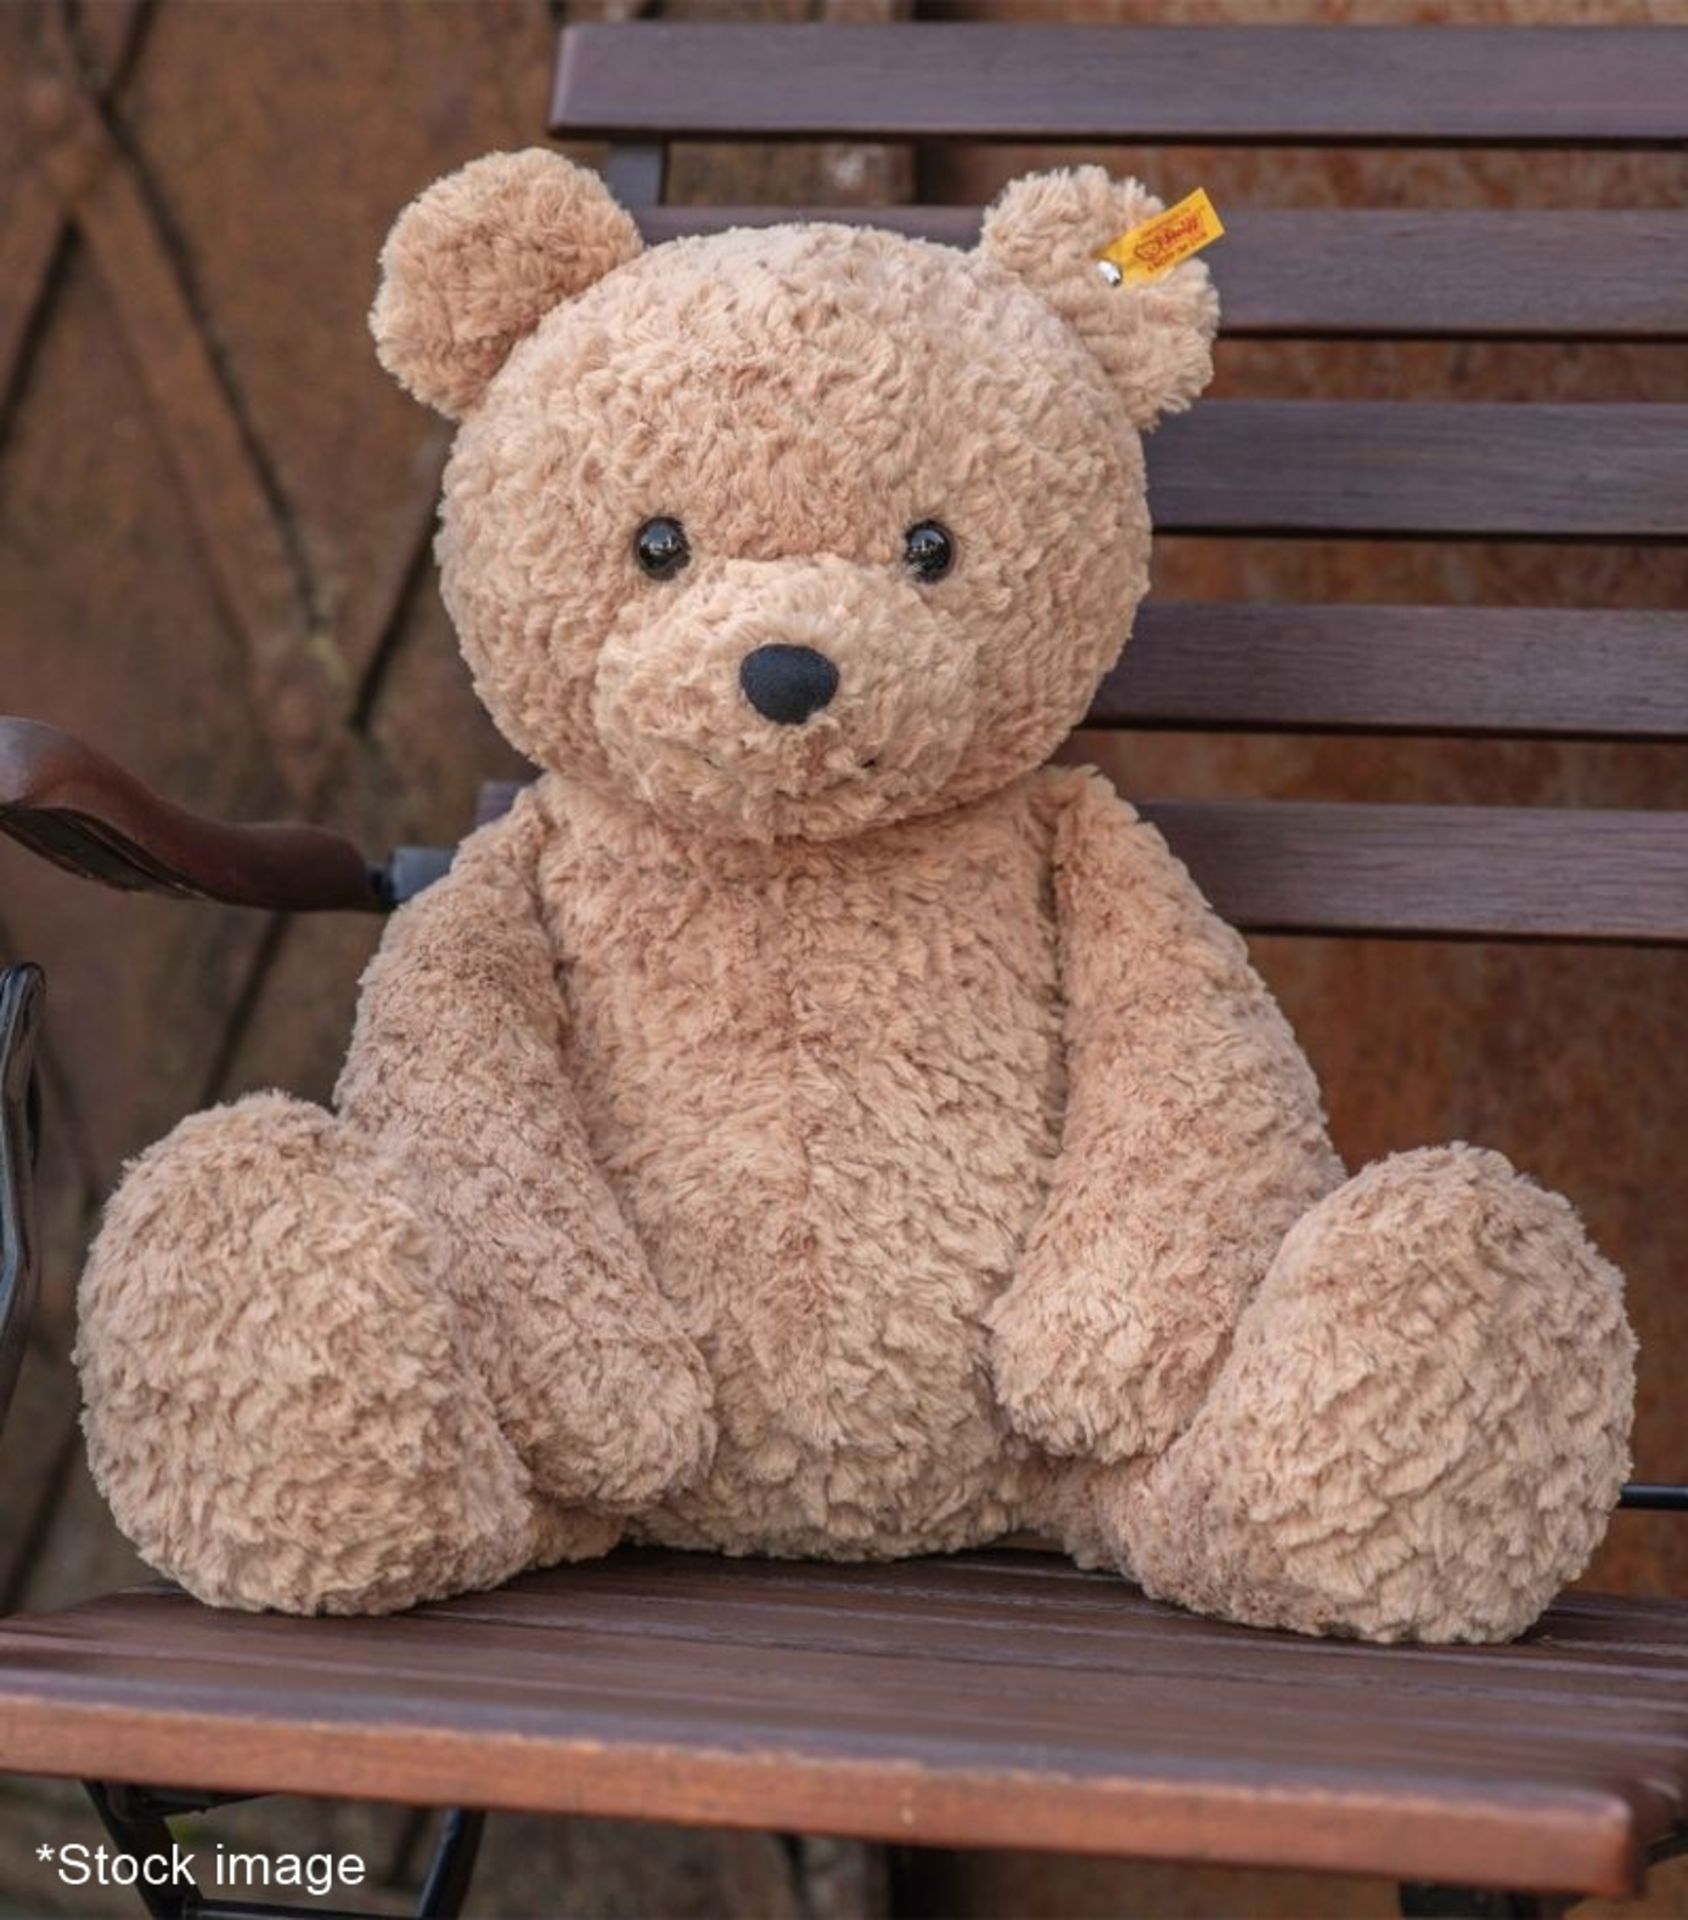 1 x STEIFF 'Jimmy' Teddy Bear (55cm) - Original Price £79.95 - Unused Stock With Tags - Ref: